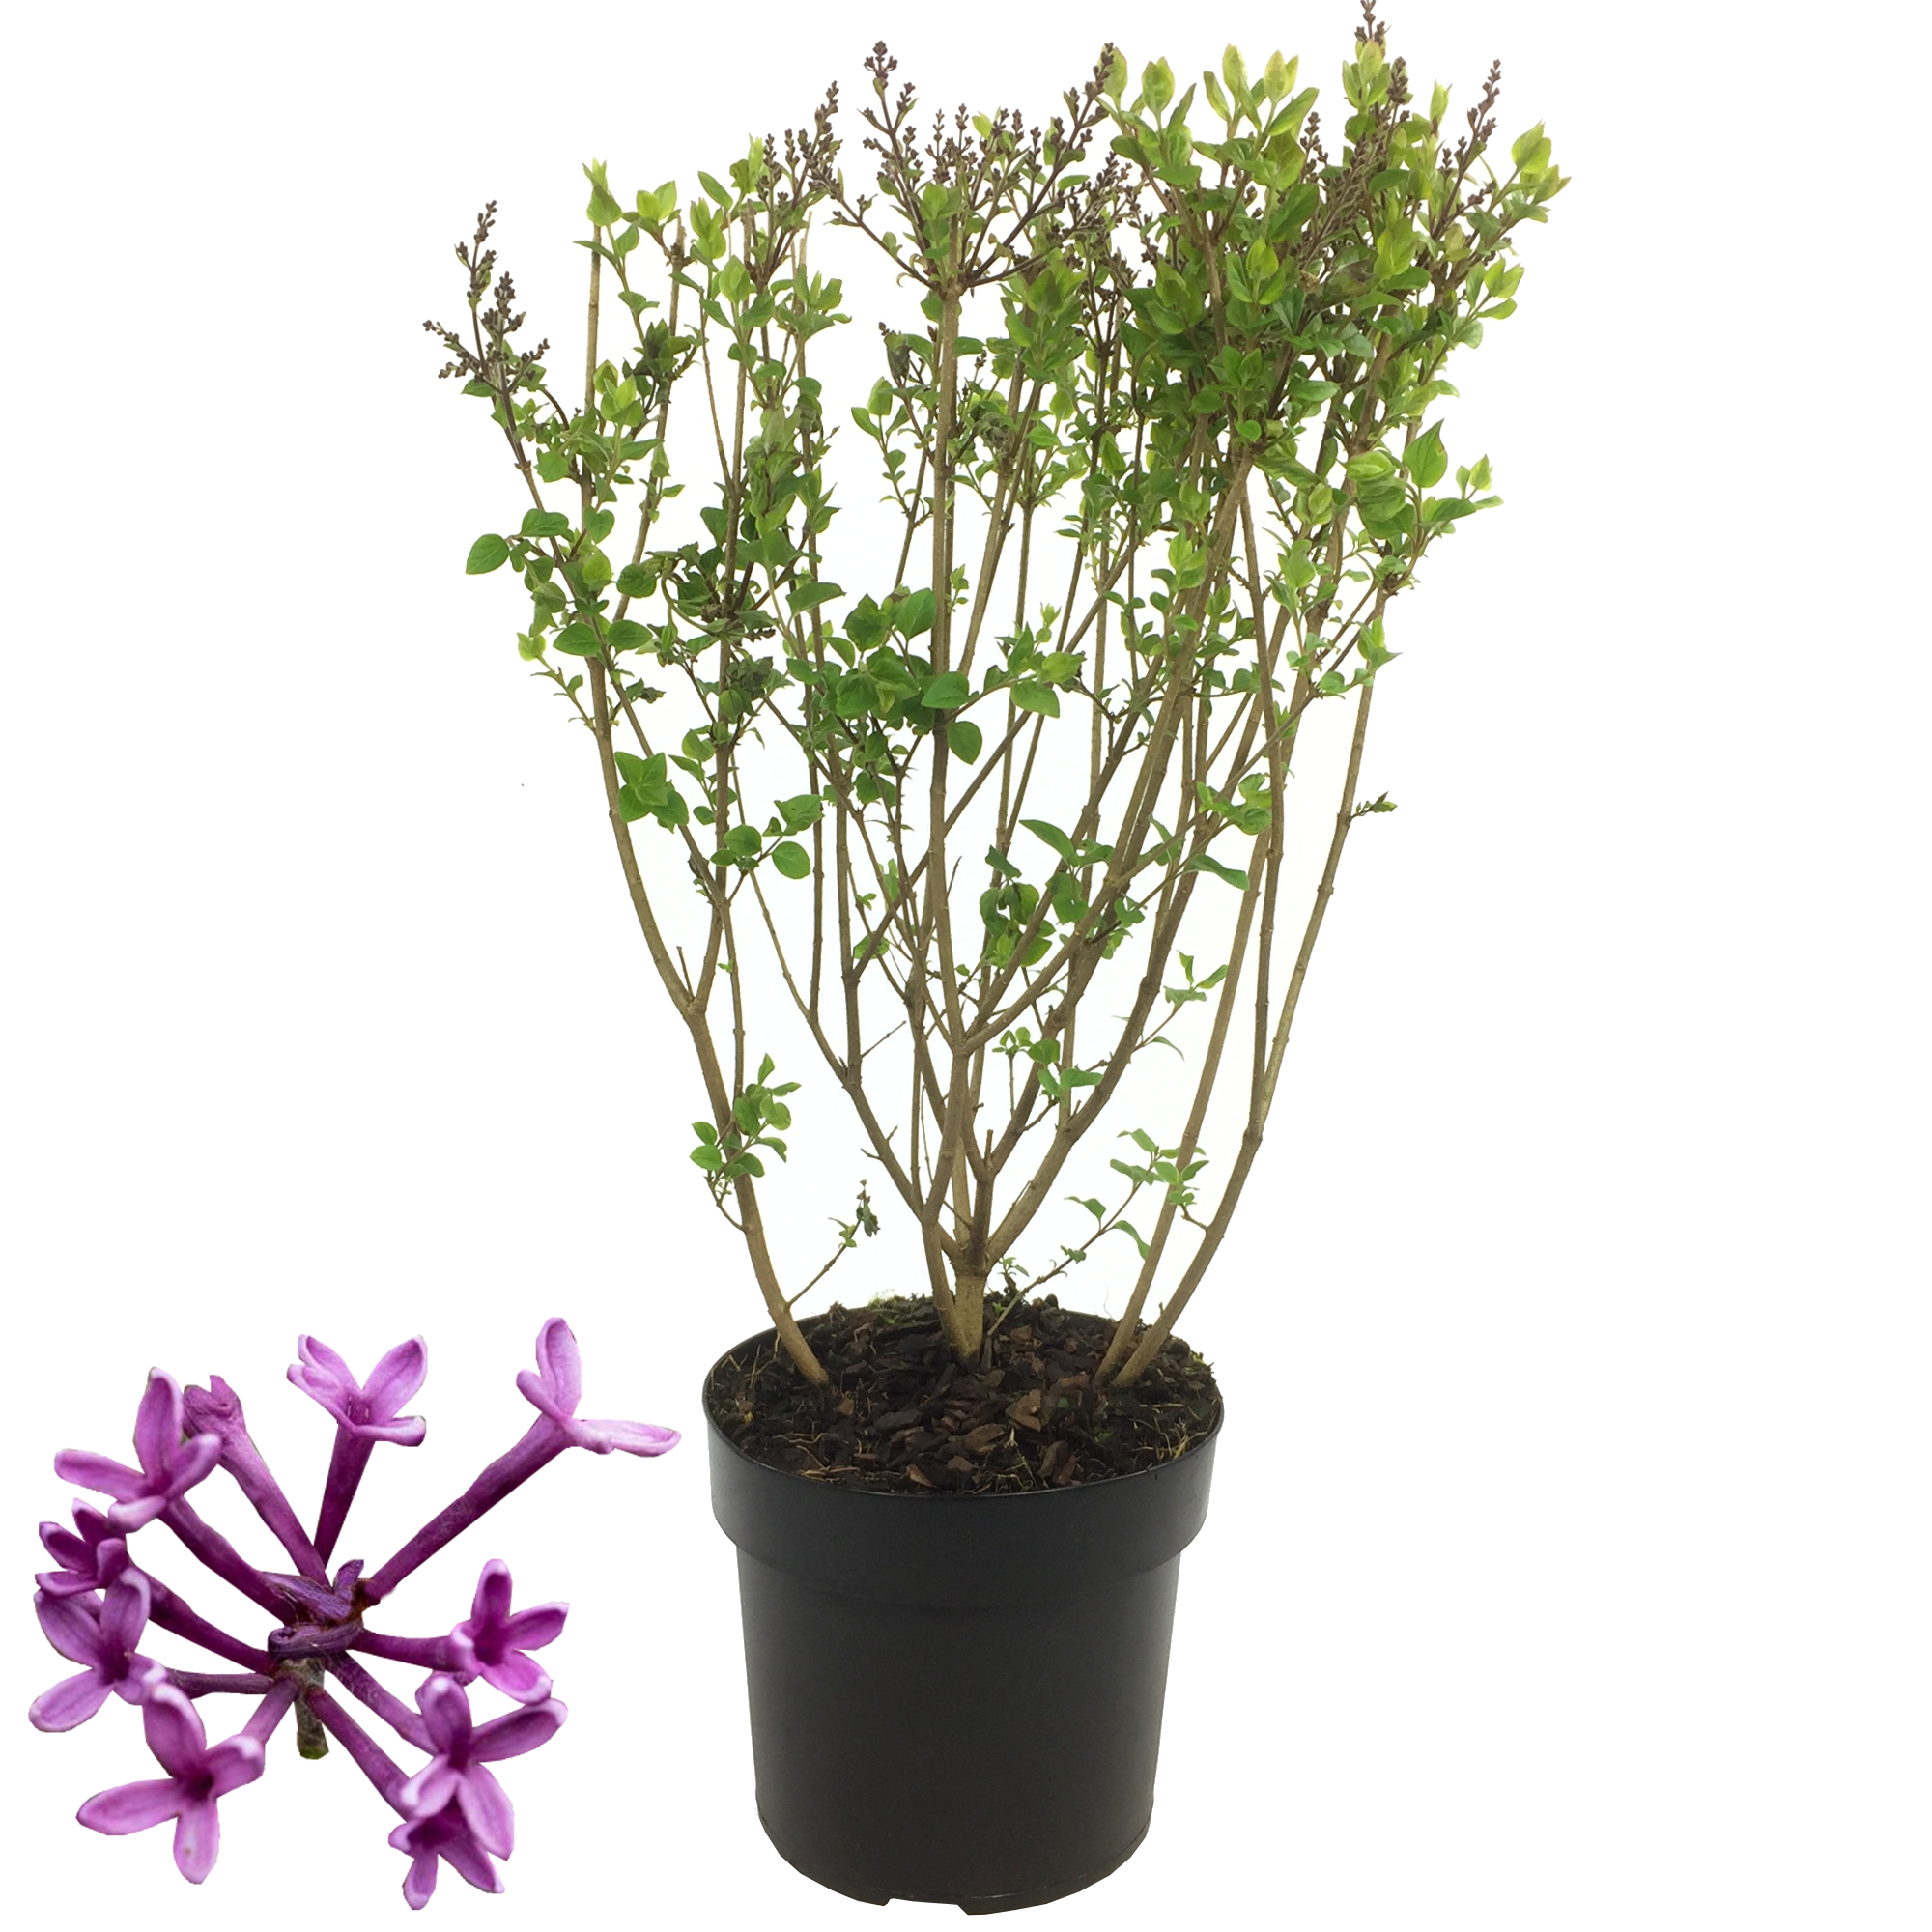 Edelflieder 'Bloomerang Dark Purple®' 15 cm Topf + product picture